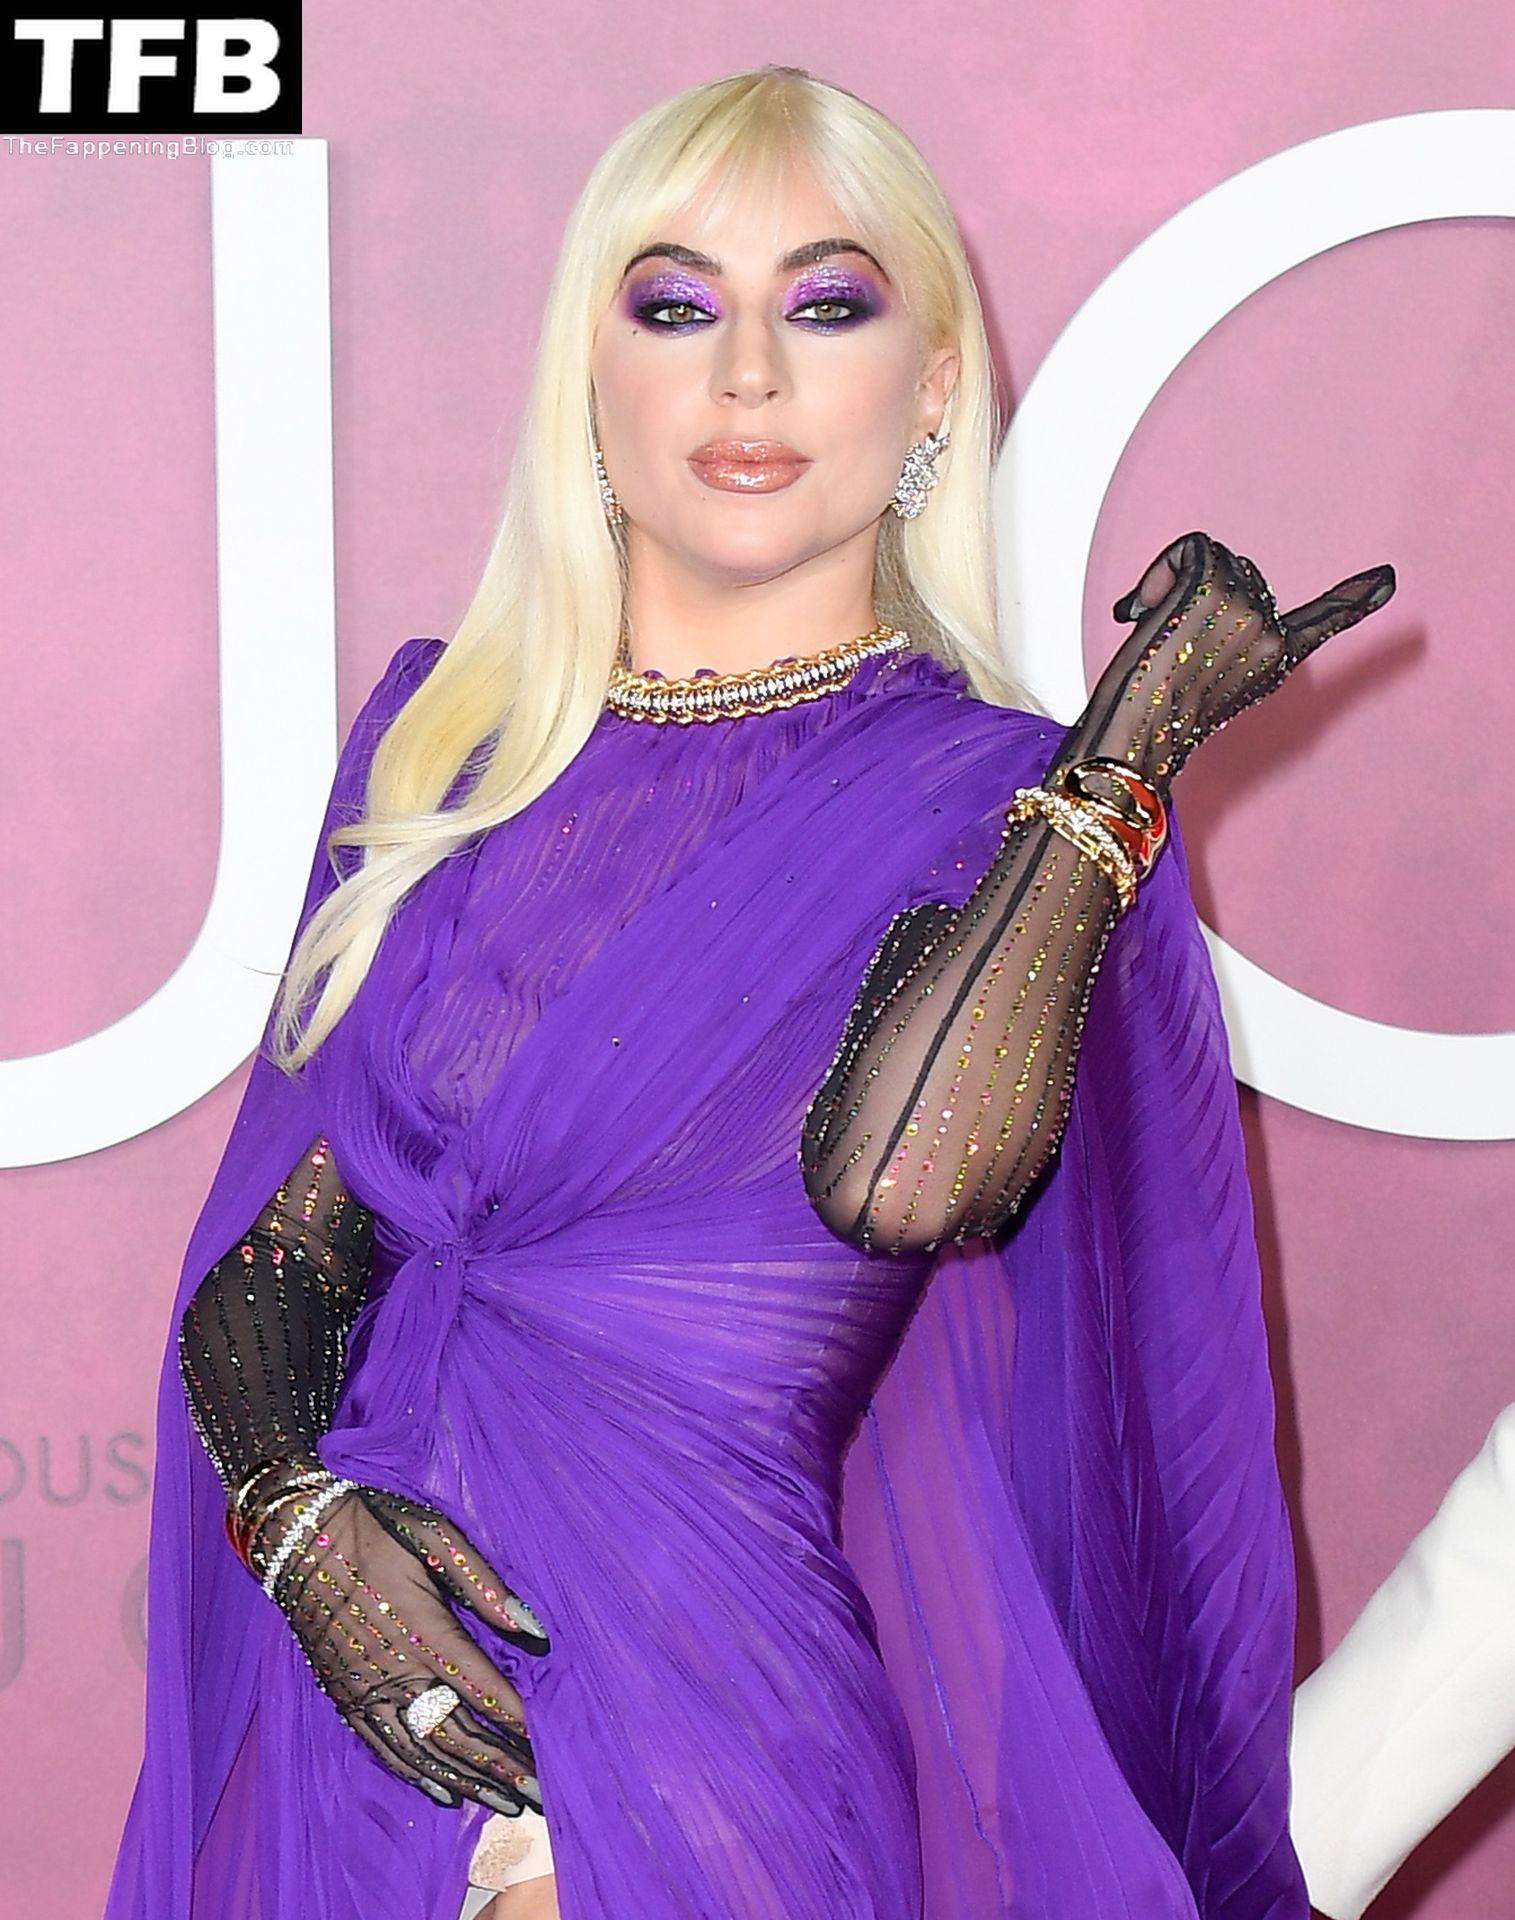 Lady-Gaga-Sexy-The-Fappening-Blog-106.jpg